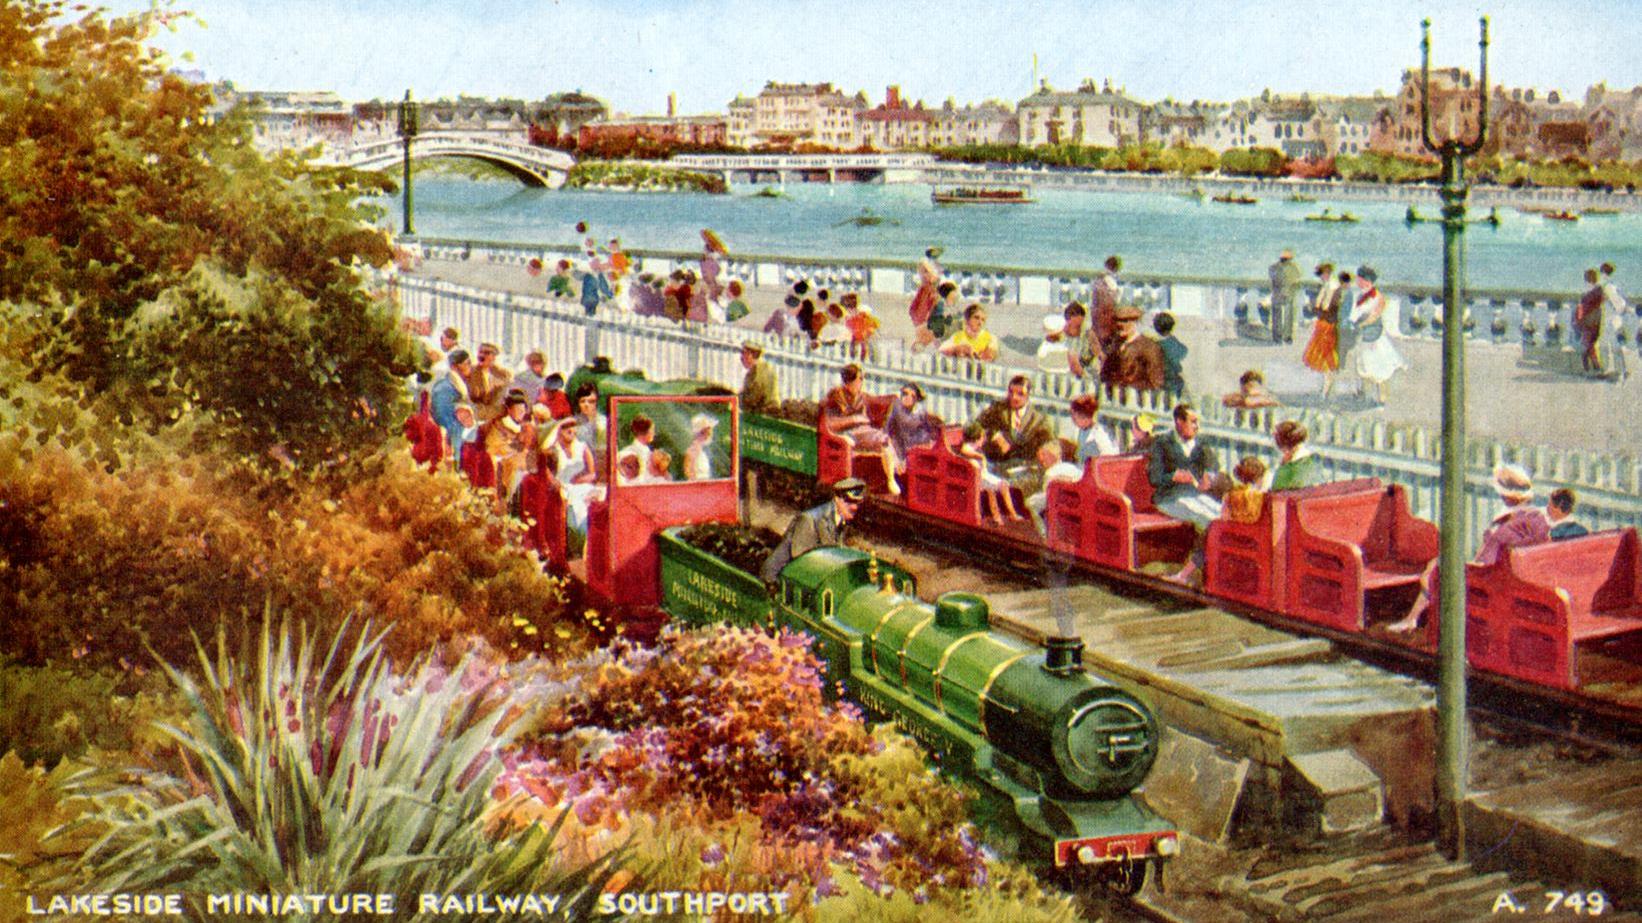 Lakeside Miniature Railway